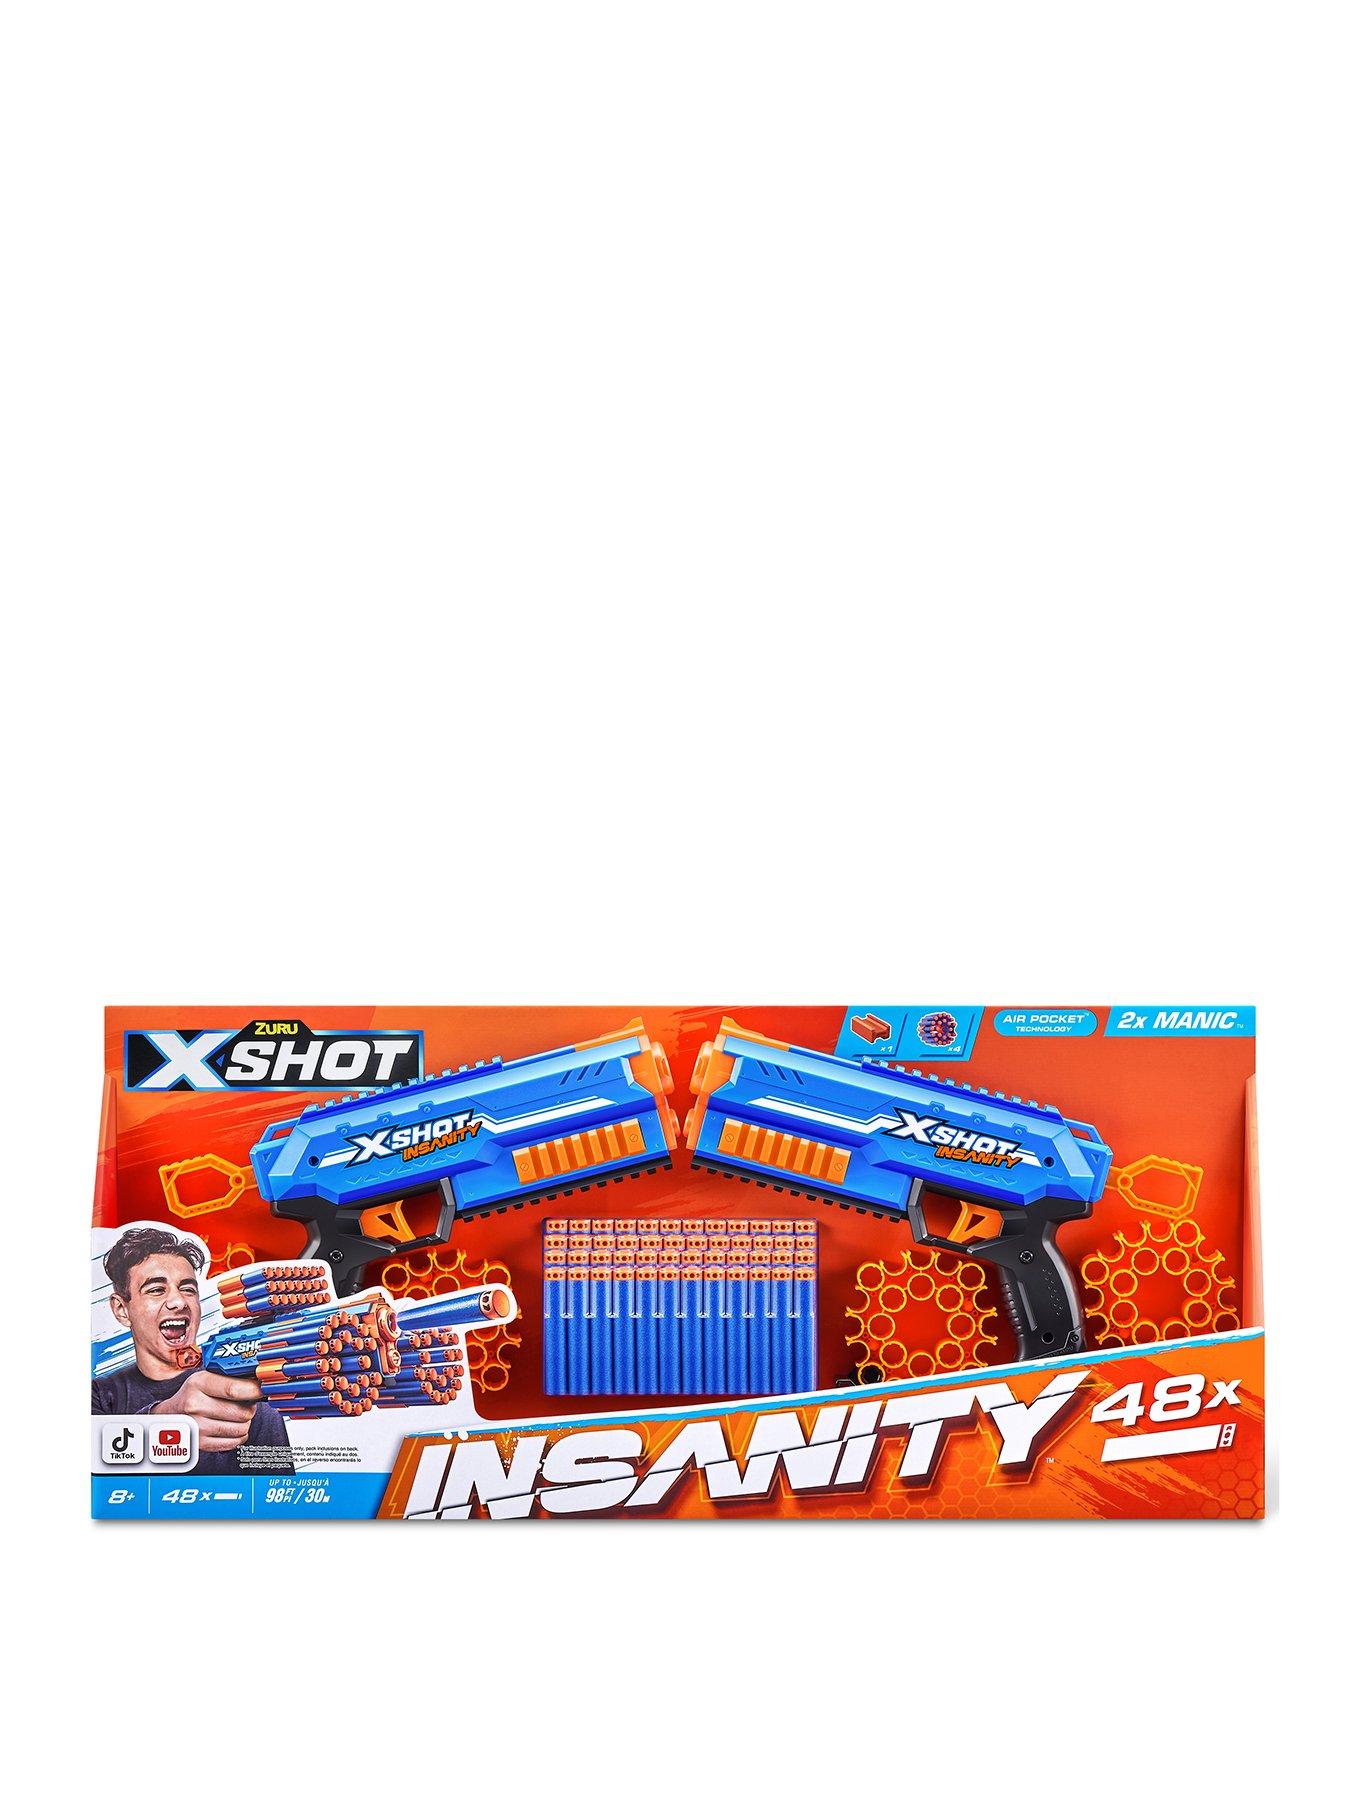 X-SHOT Insanity Mad Mega Barrel by ZURU